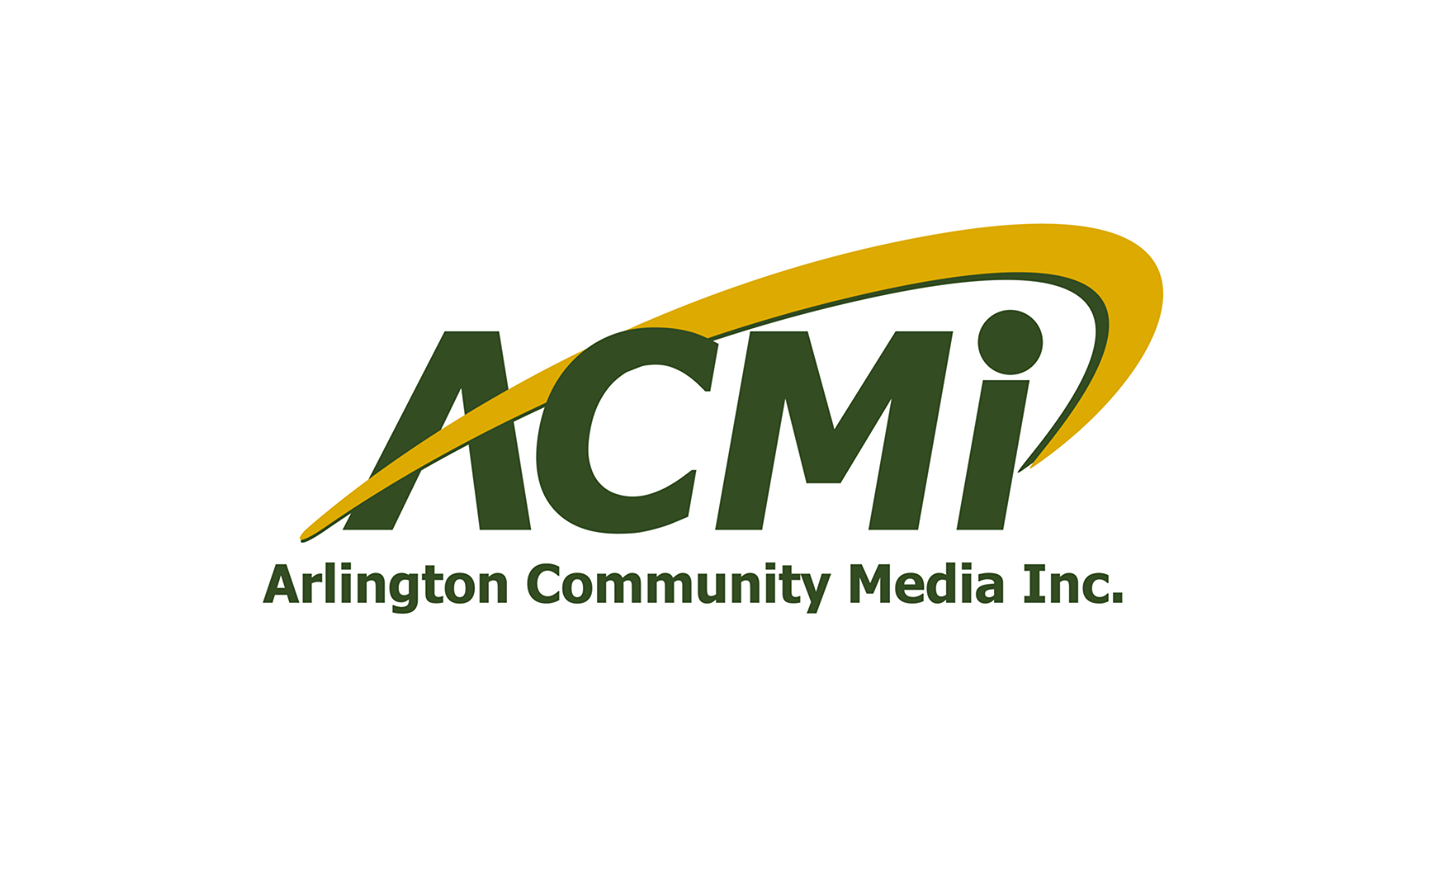 ACMi Arlington Community Media Inc.